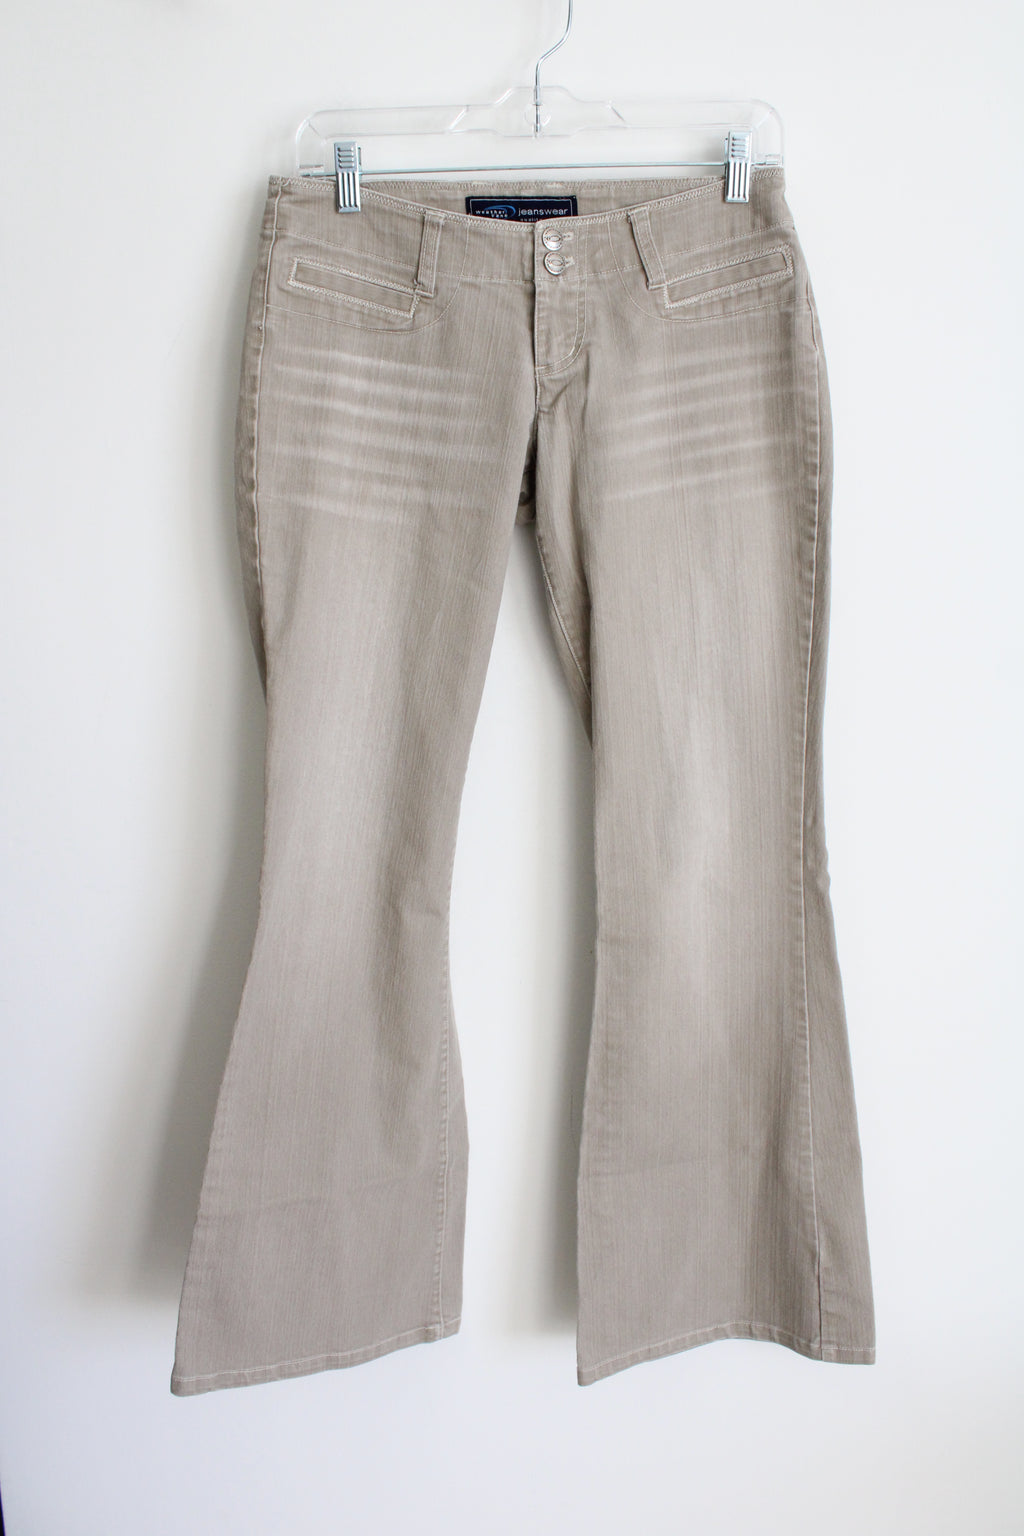 Weather Vane Jeanswear Flair Tan Denim Jeans | 5